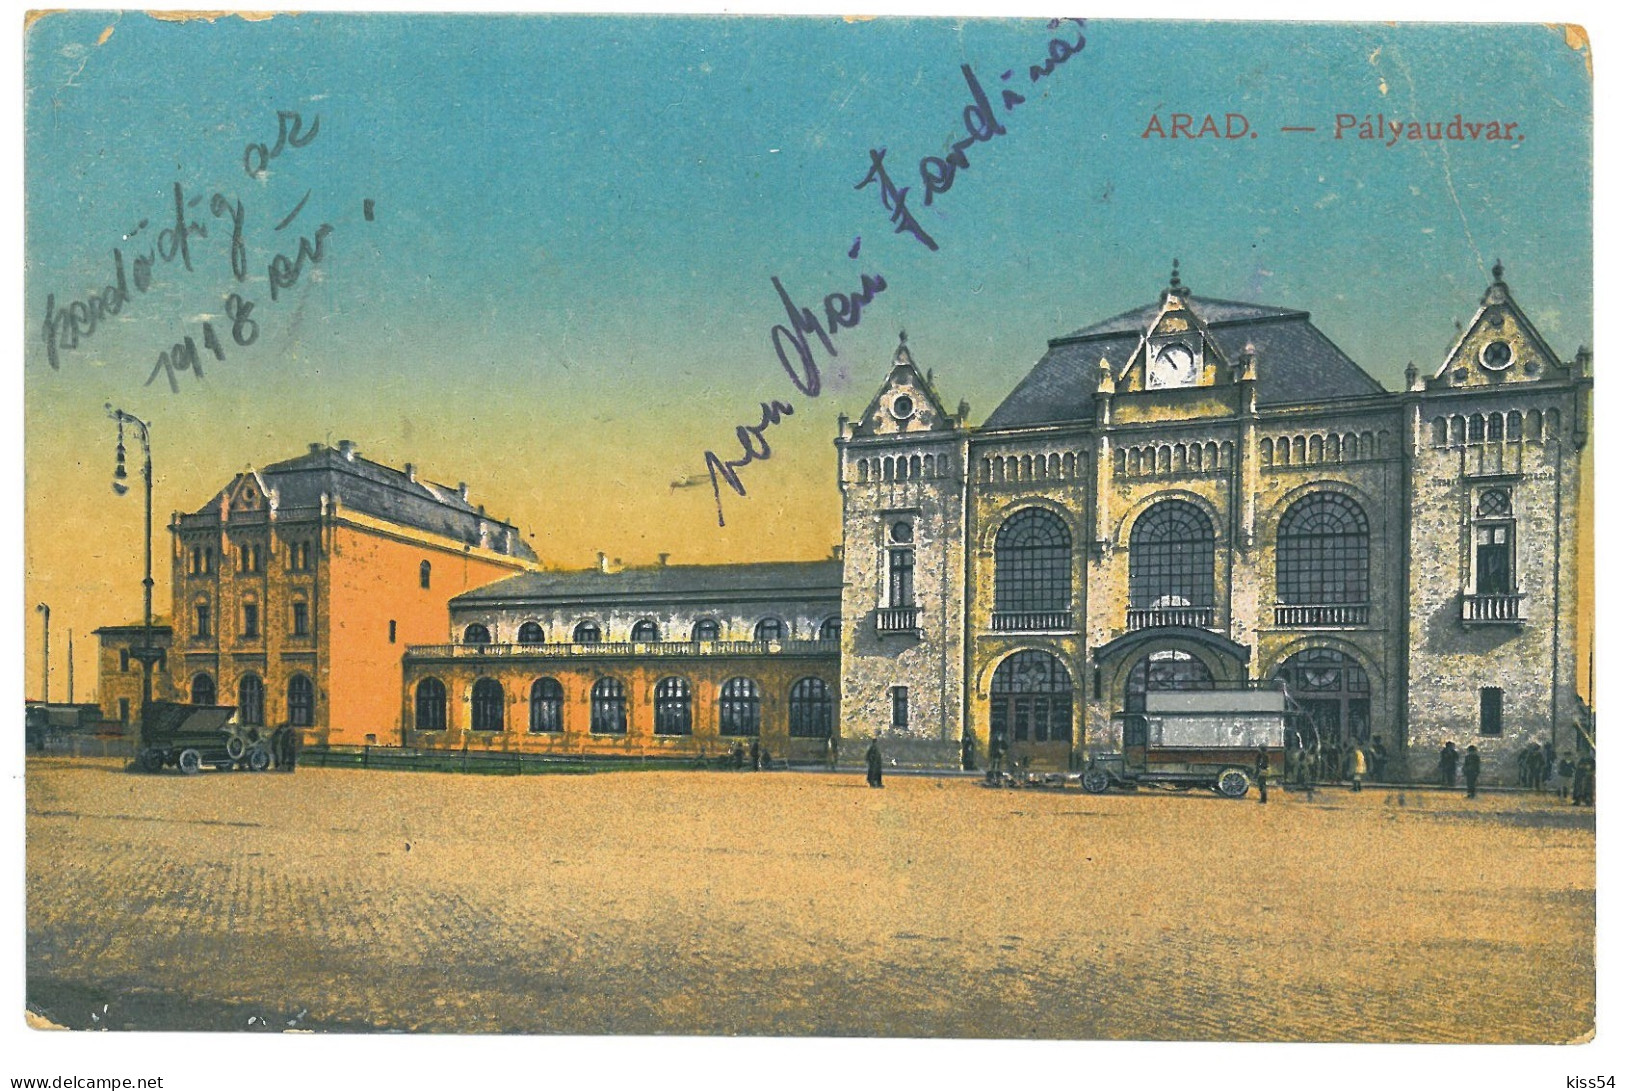 RO 52 - 20319 ARAD, Railway Station, Omnibus, Romania - Old Postcard - Used - 1918 - Rumania